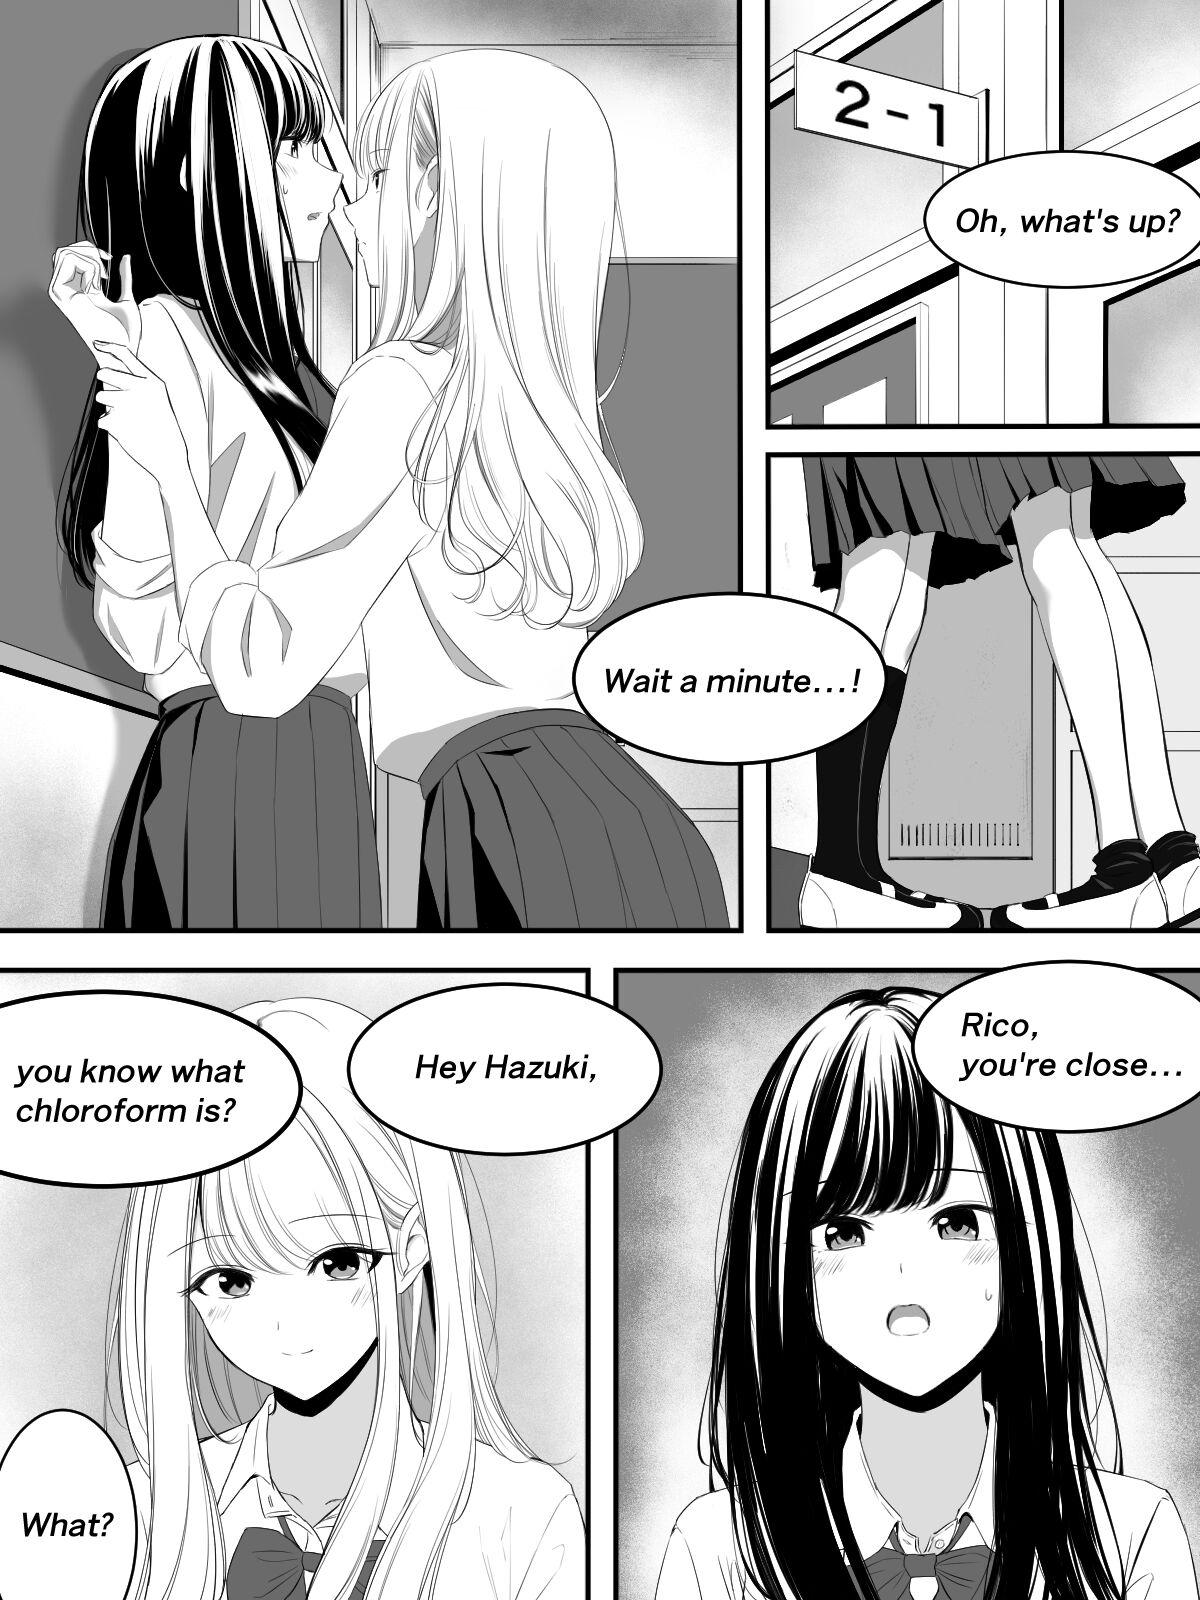 Yuri comic Part 1,2 and 3. 10